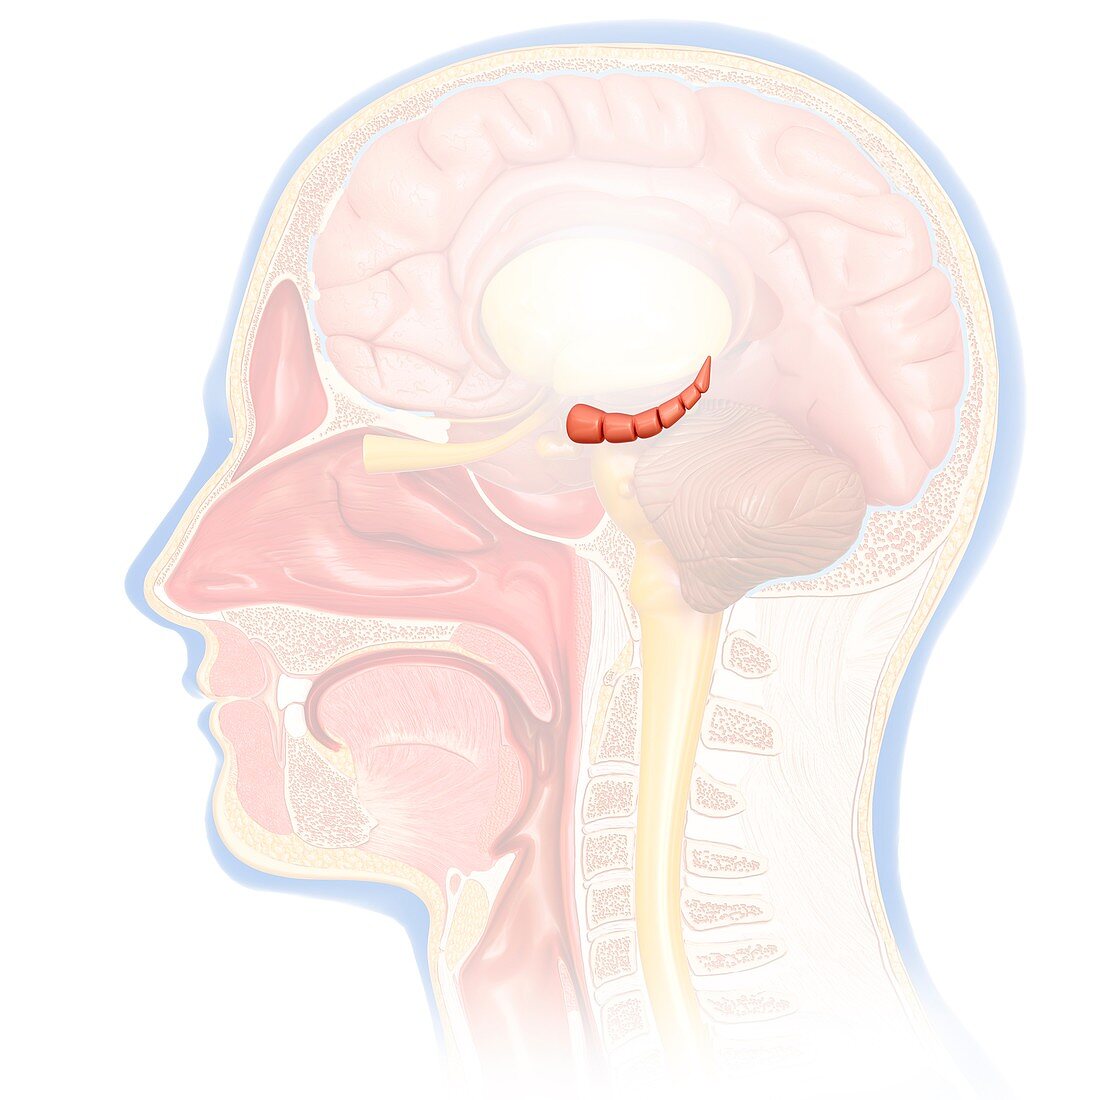 Hippocampus in human brain,illustration